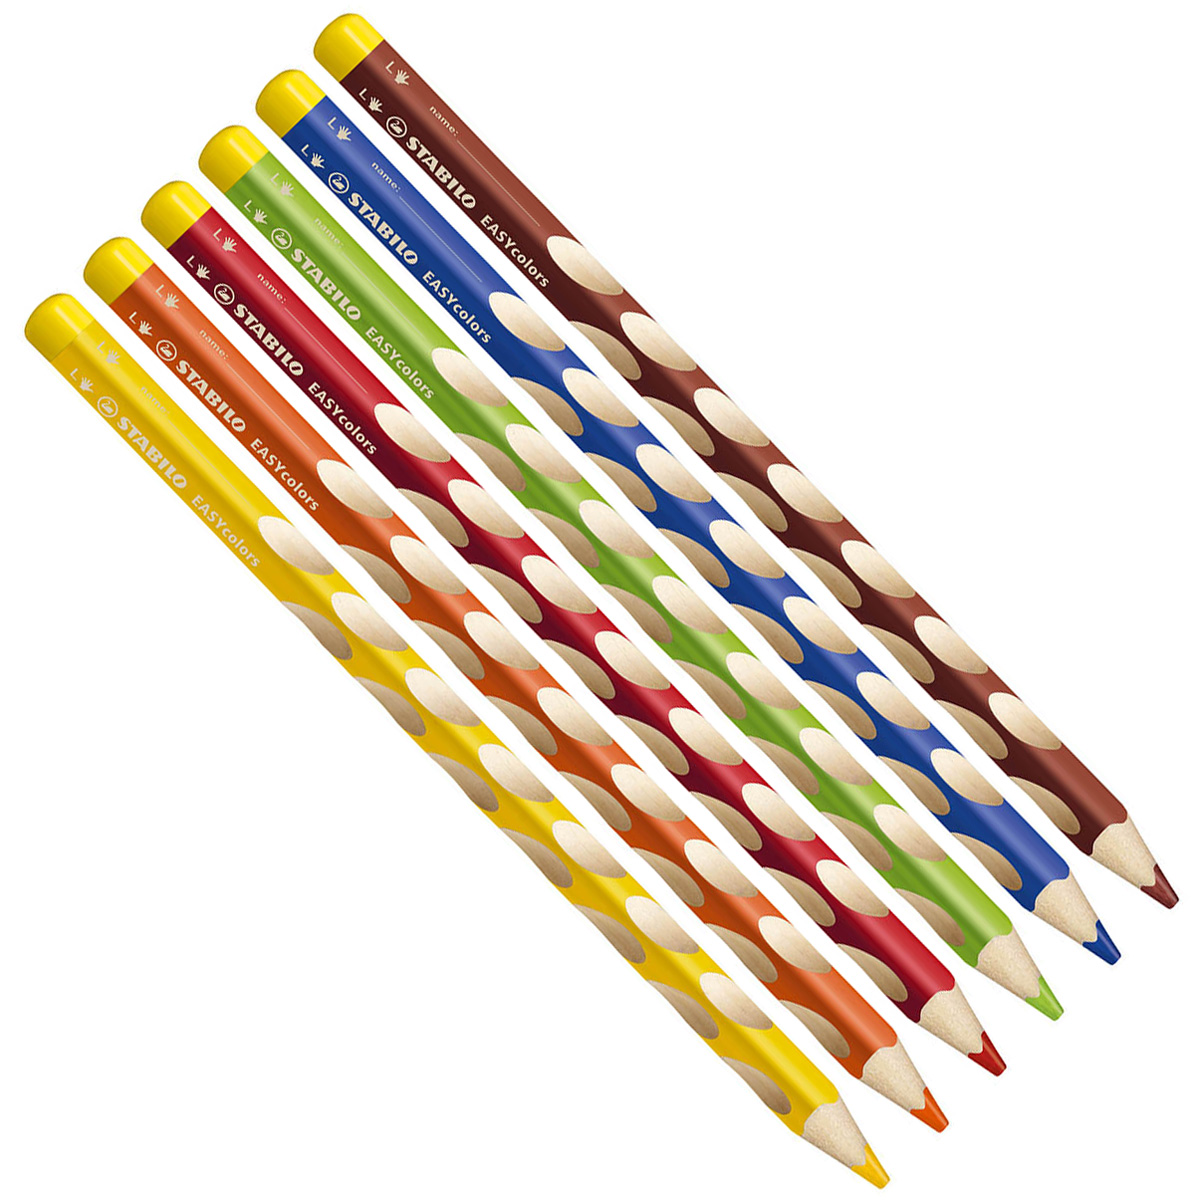 Stabilo-EASY-Colors-6er-Set-Linkshaender-stifte-lafueliki